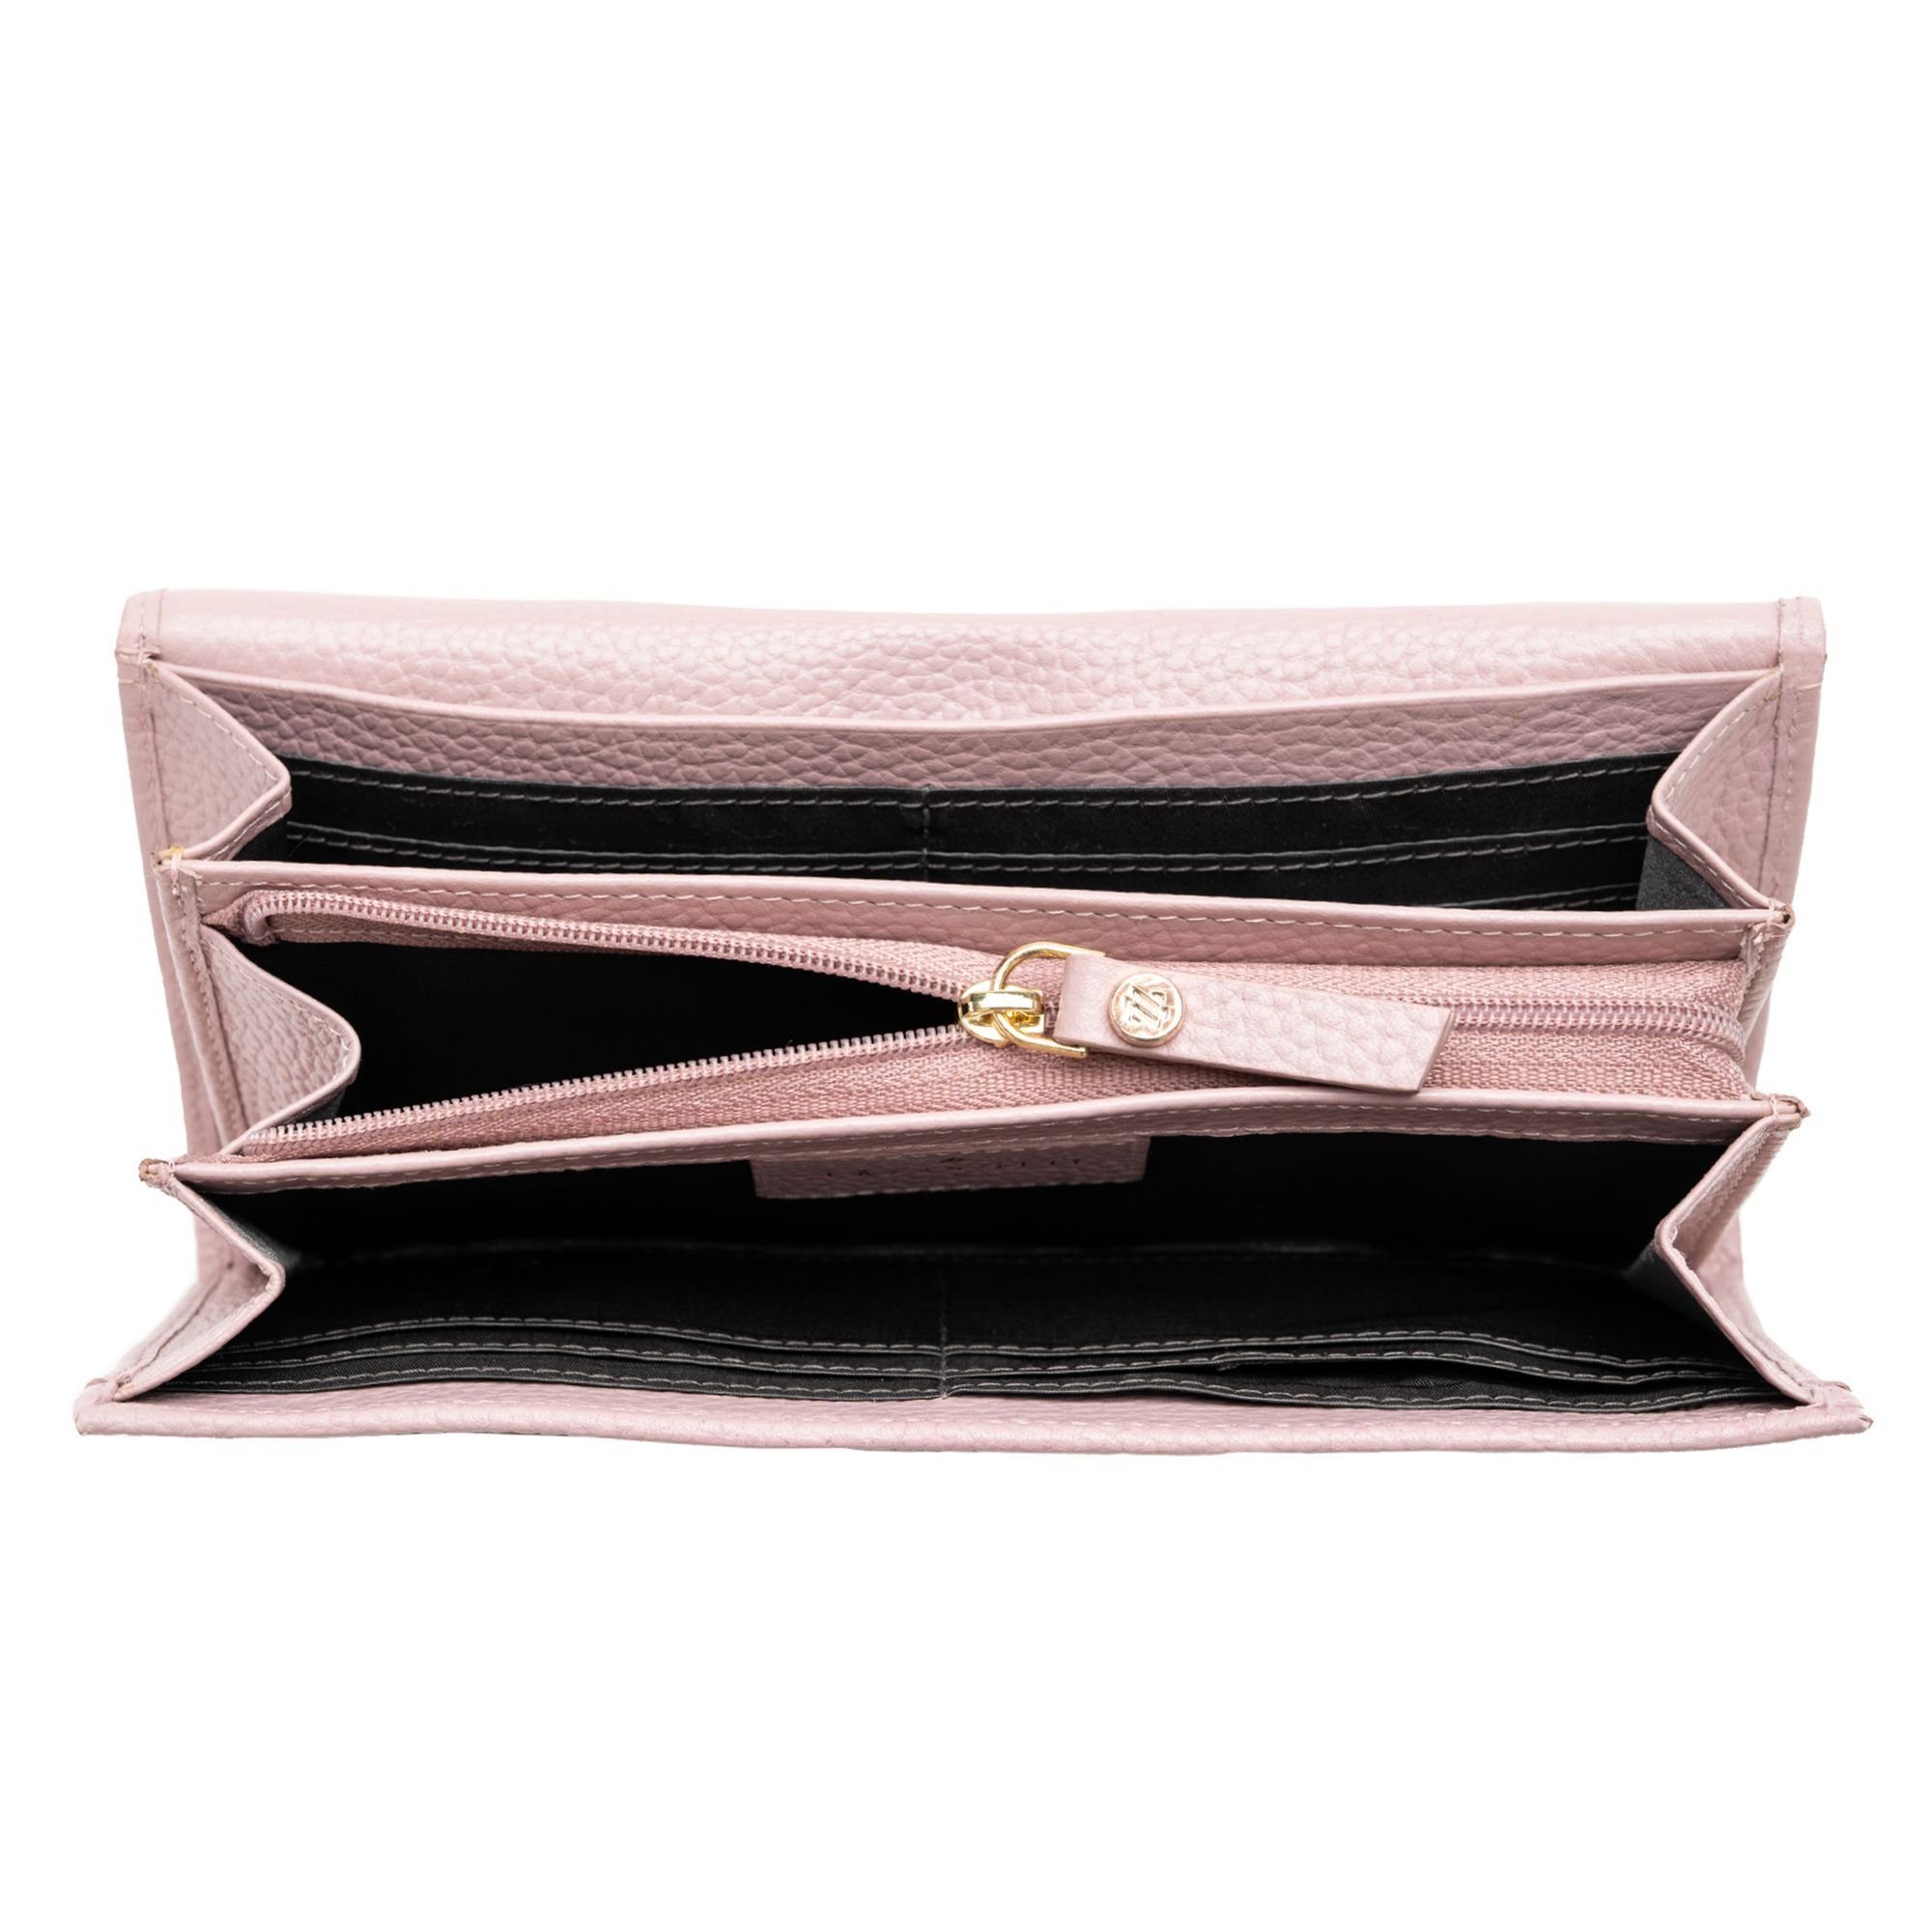 Lazarotti Geldbörse Bologna Leather, Leder pink